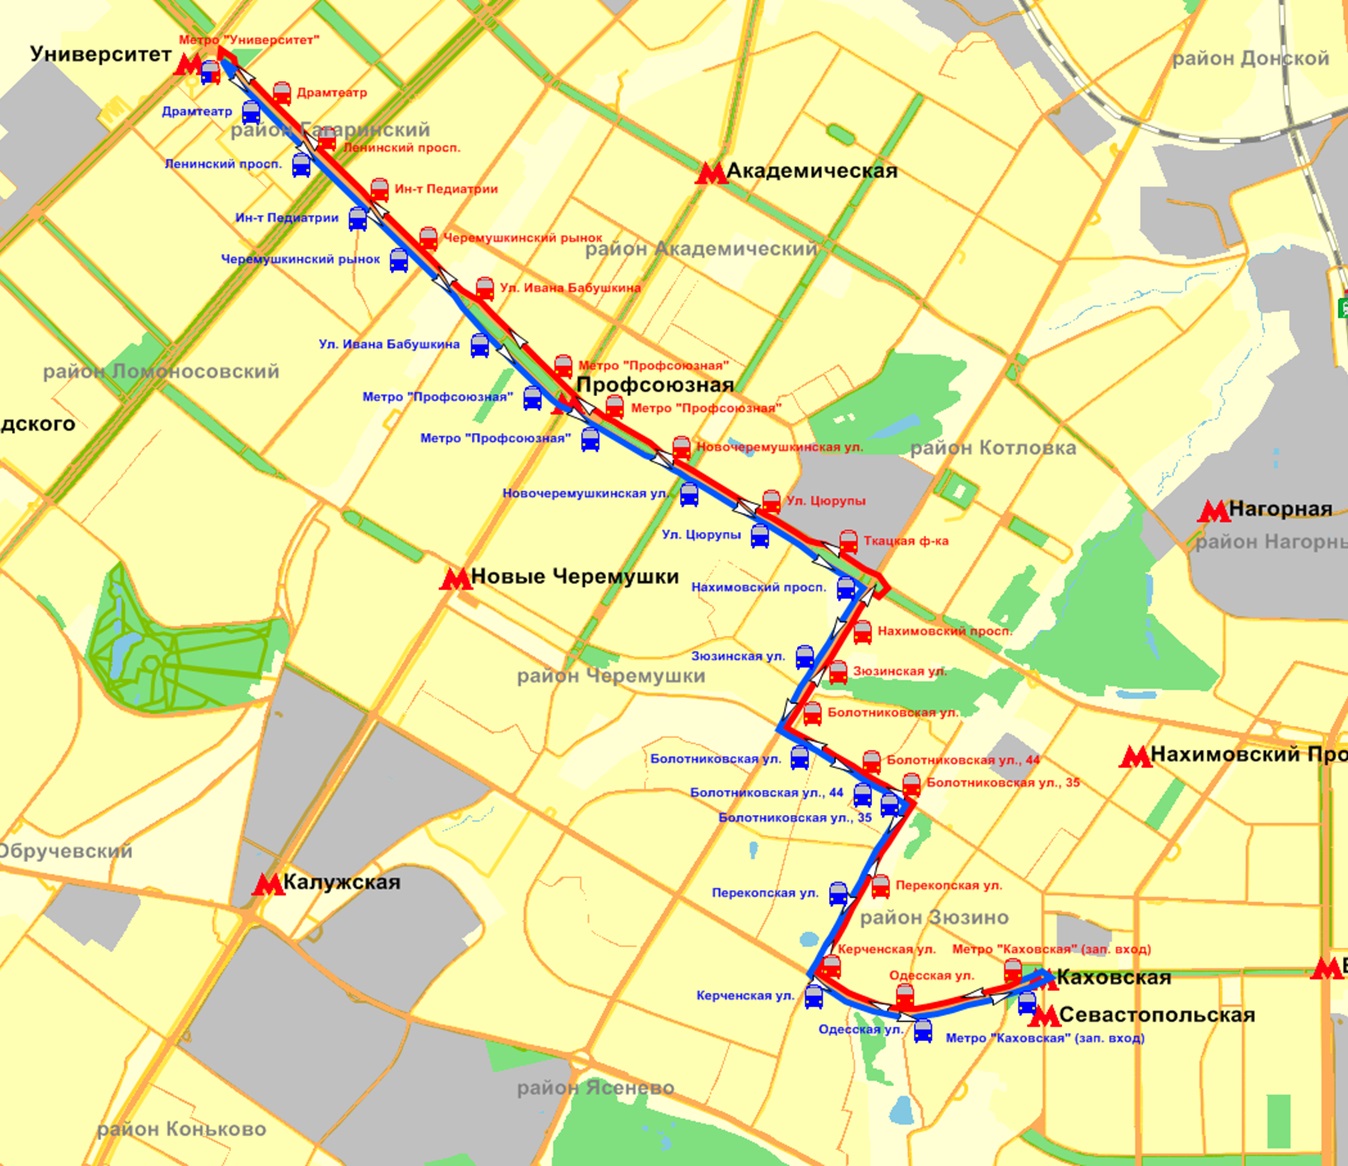 Зюзино автобусы. Метро Зюзино на карте. Метро Зюзино на карте метрополитена. Схема метро Москвы Зюзино. Метро университет на карте.